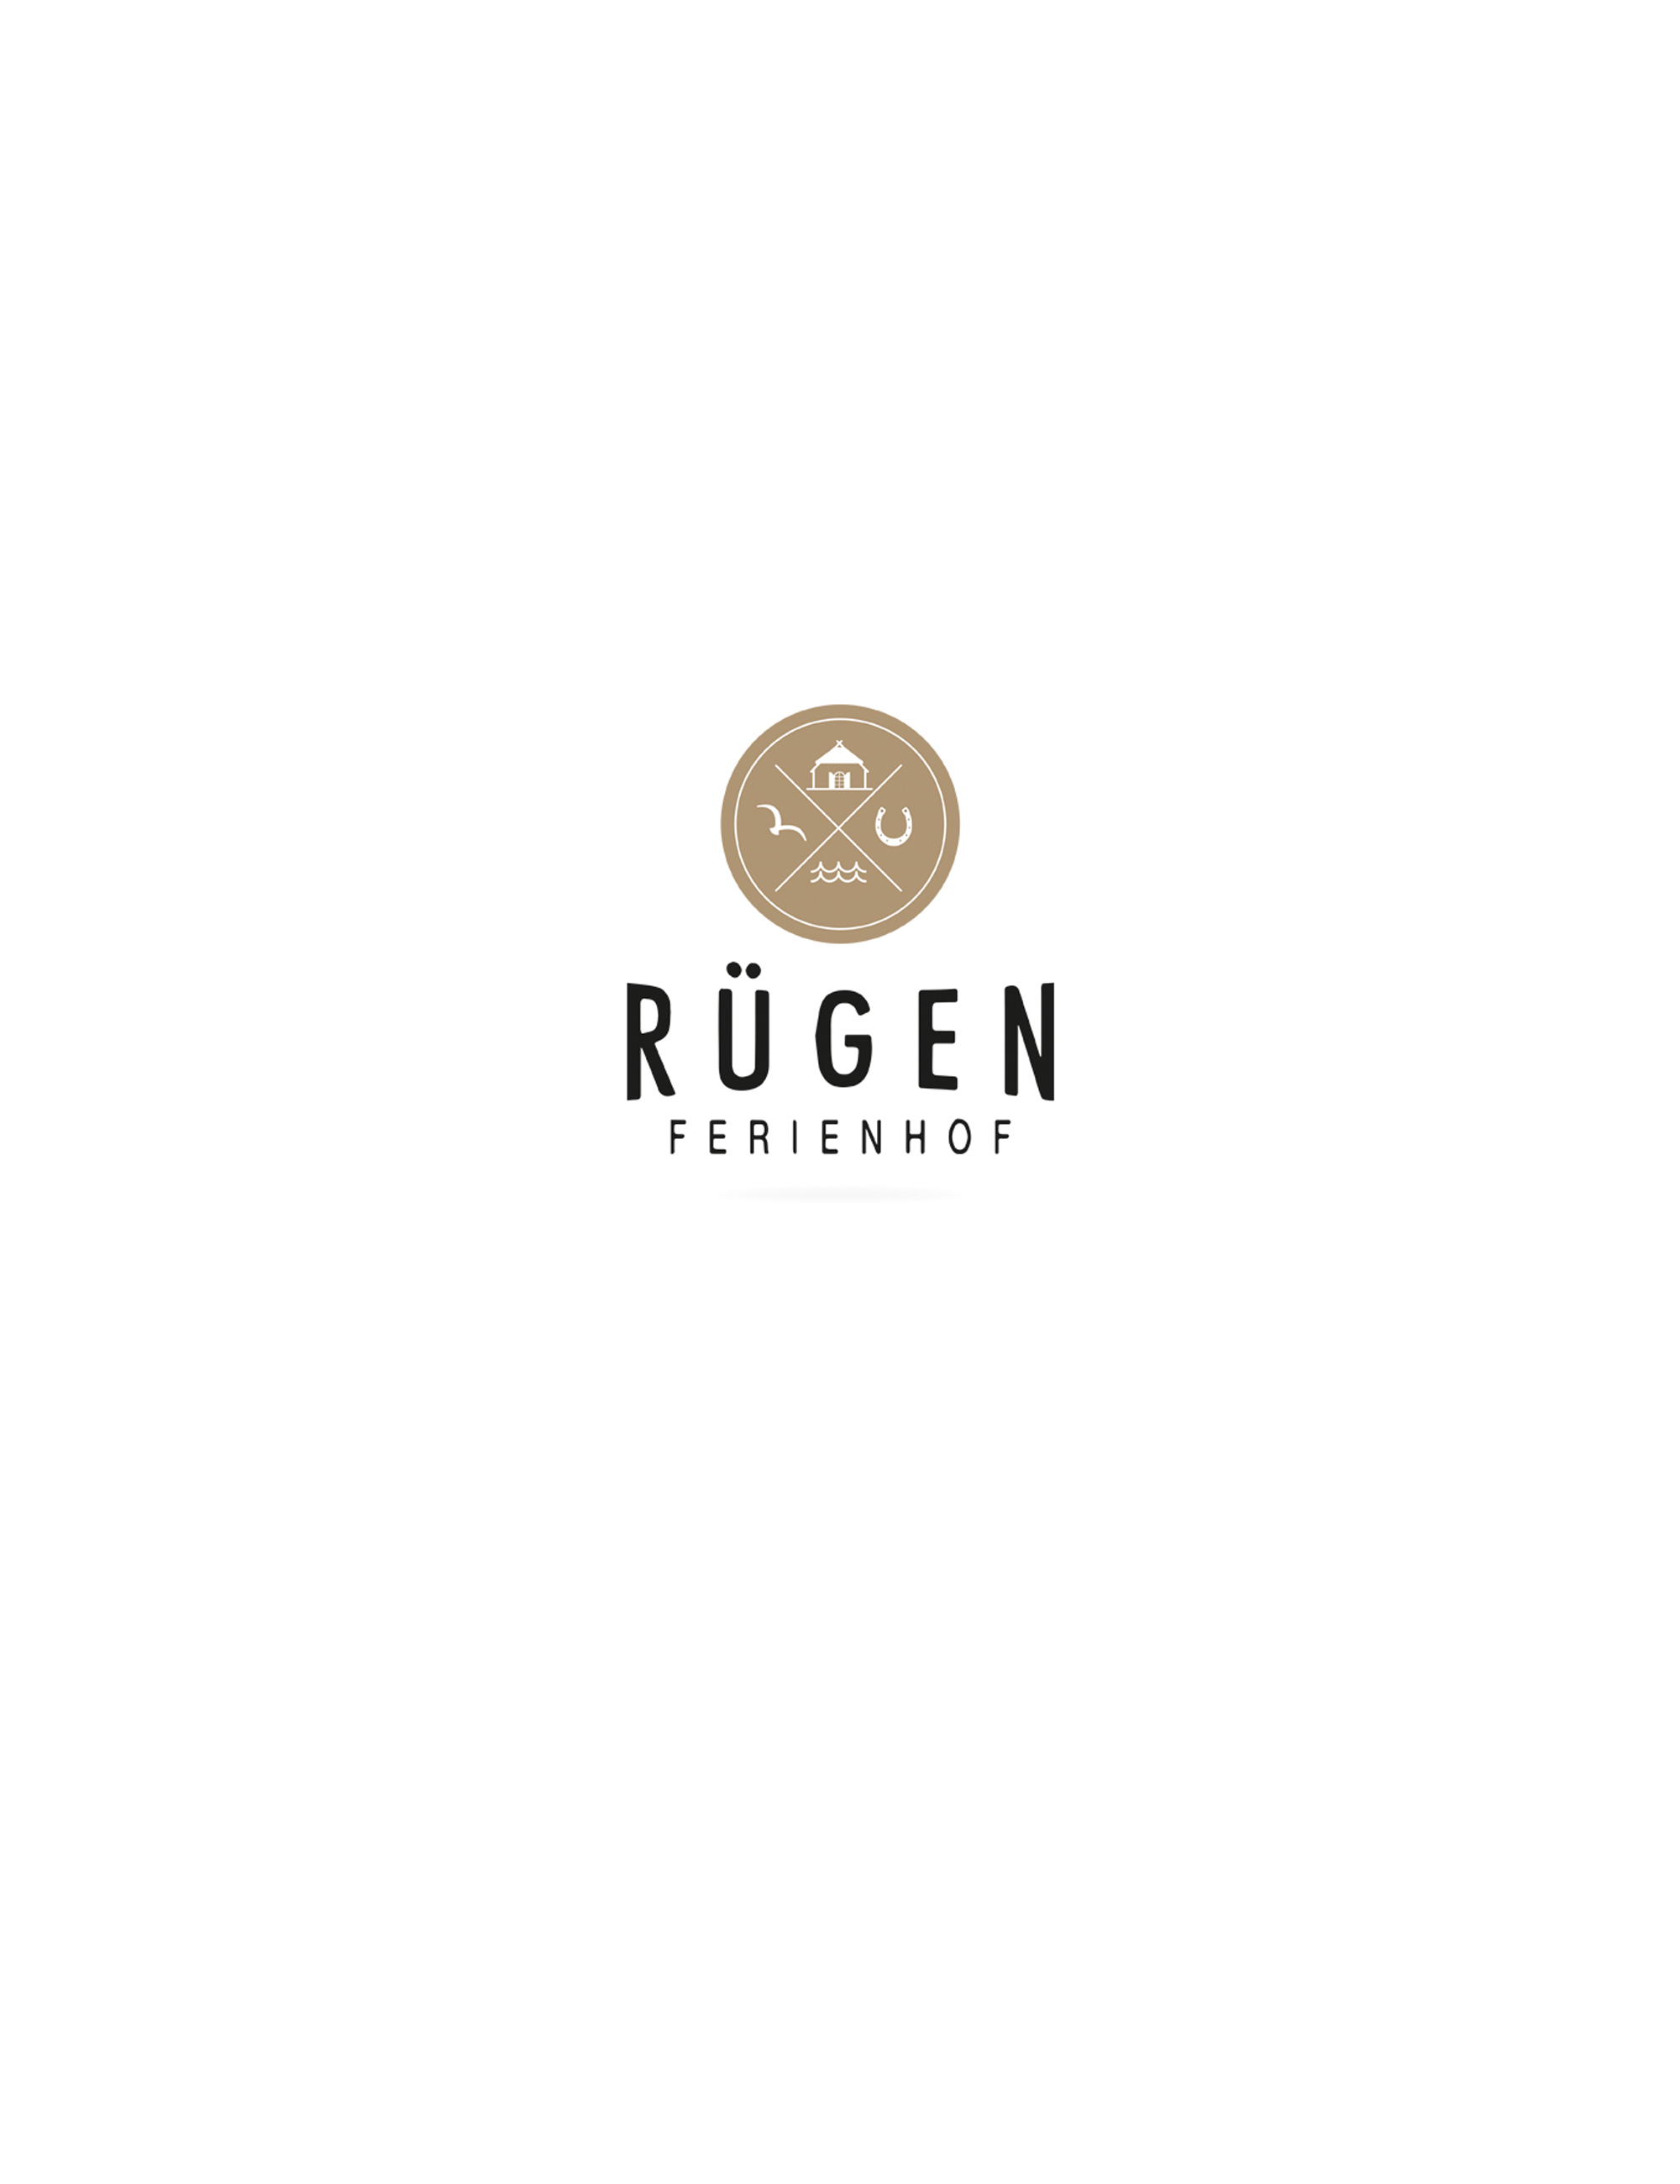 Ferienhof Rügen Logo Markenkreation